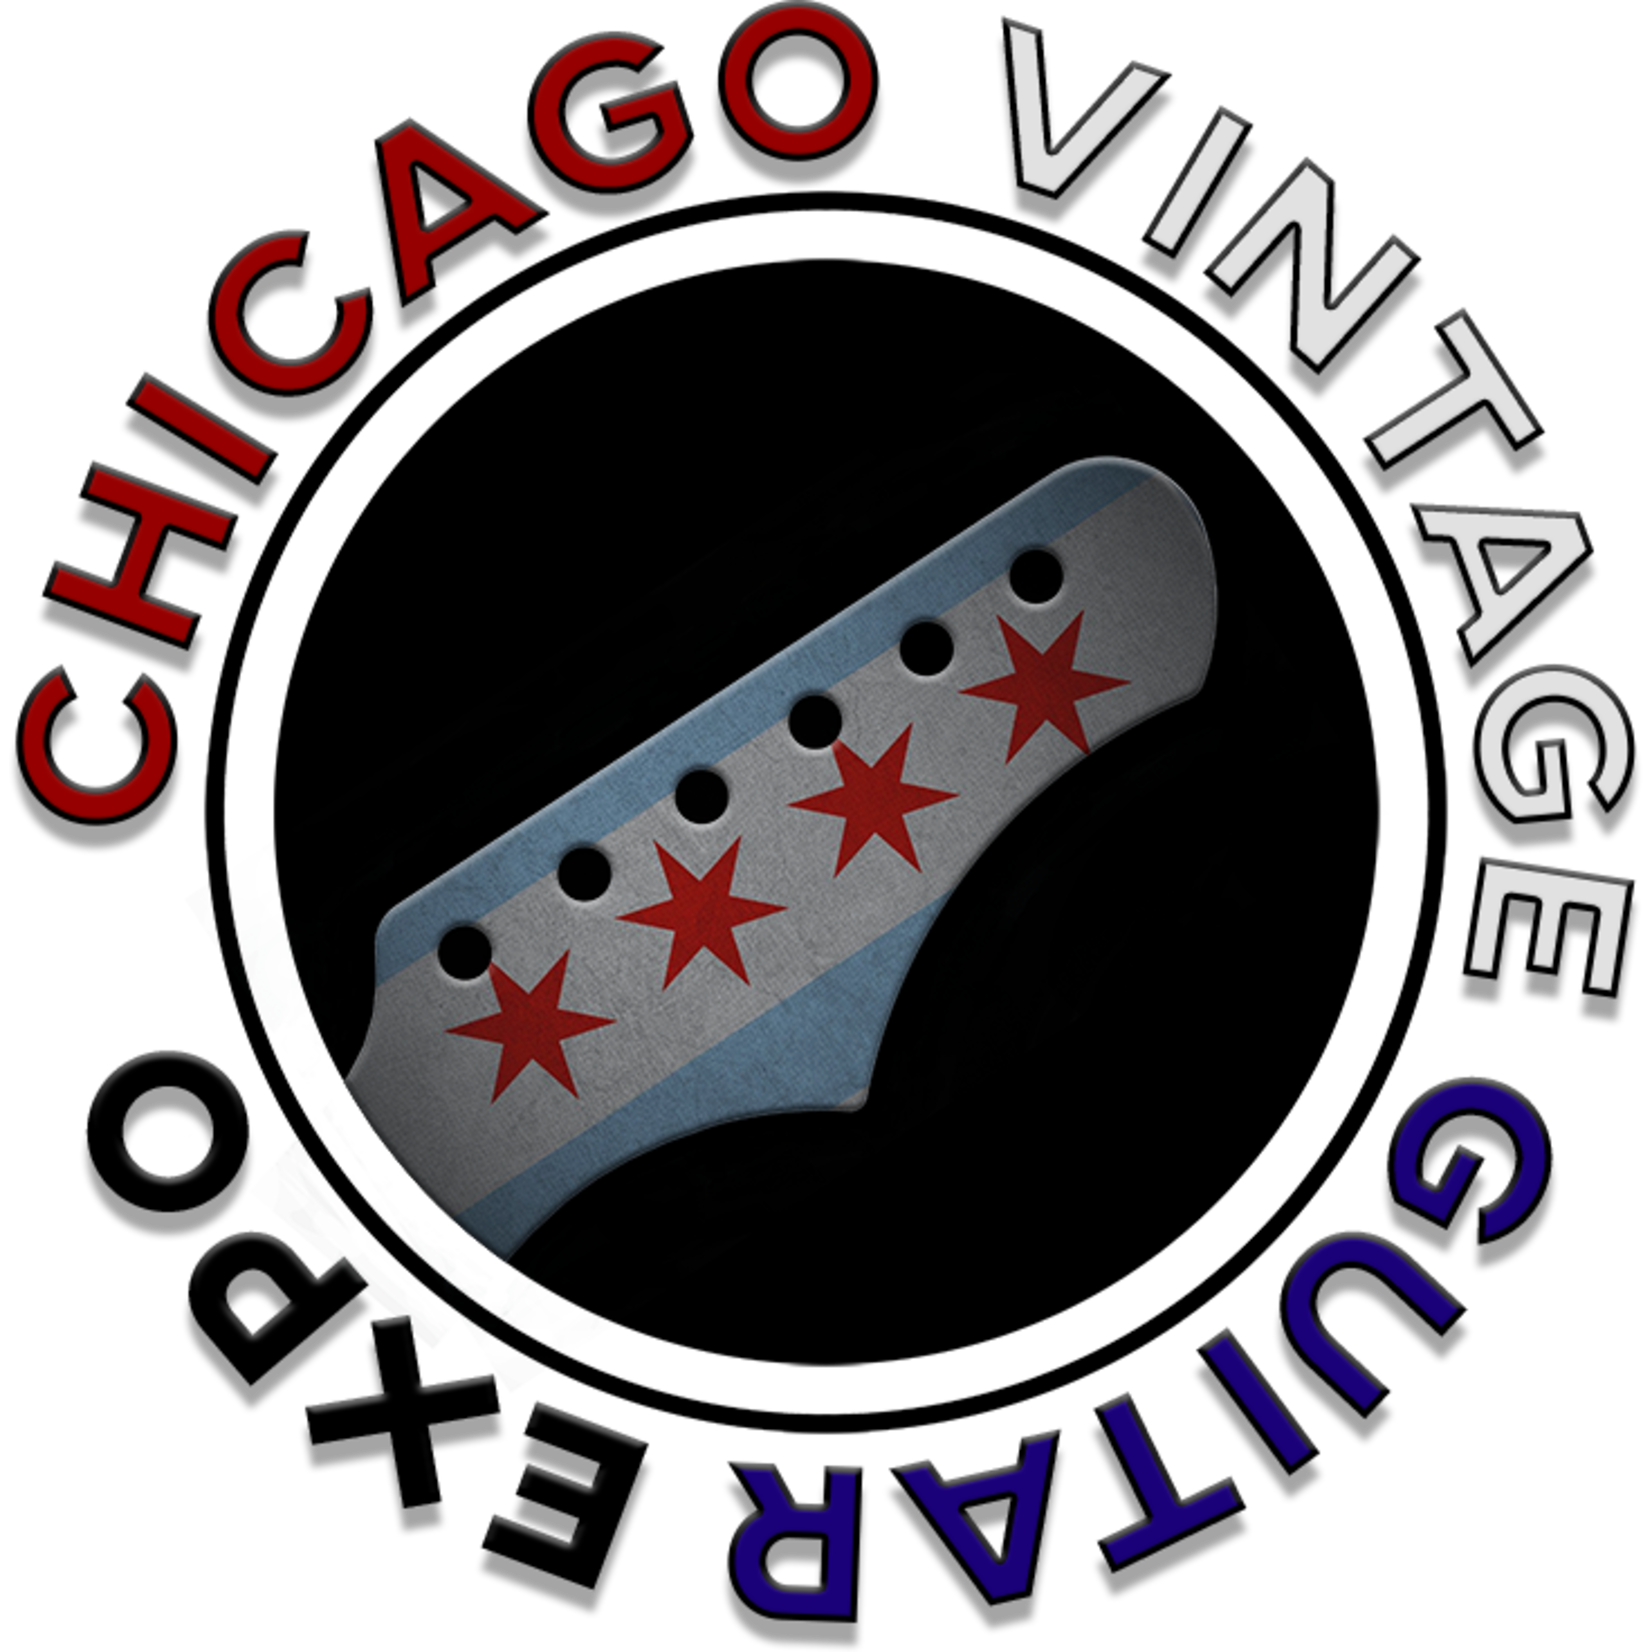 Chicago Vintage Guitar Show Chicago Vintage Guitar Expo-Elk Grove Village